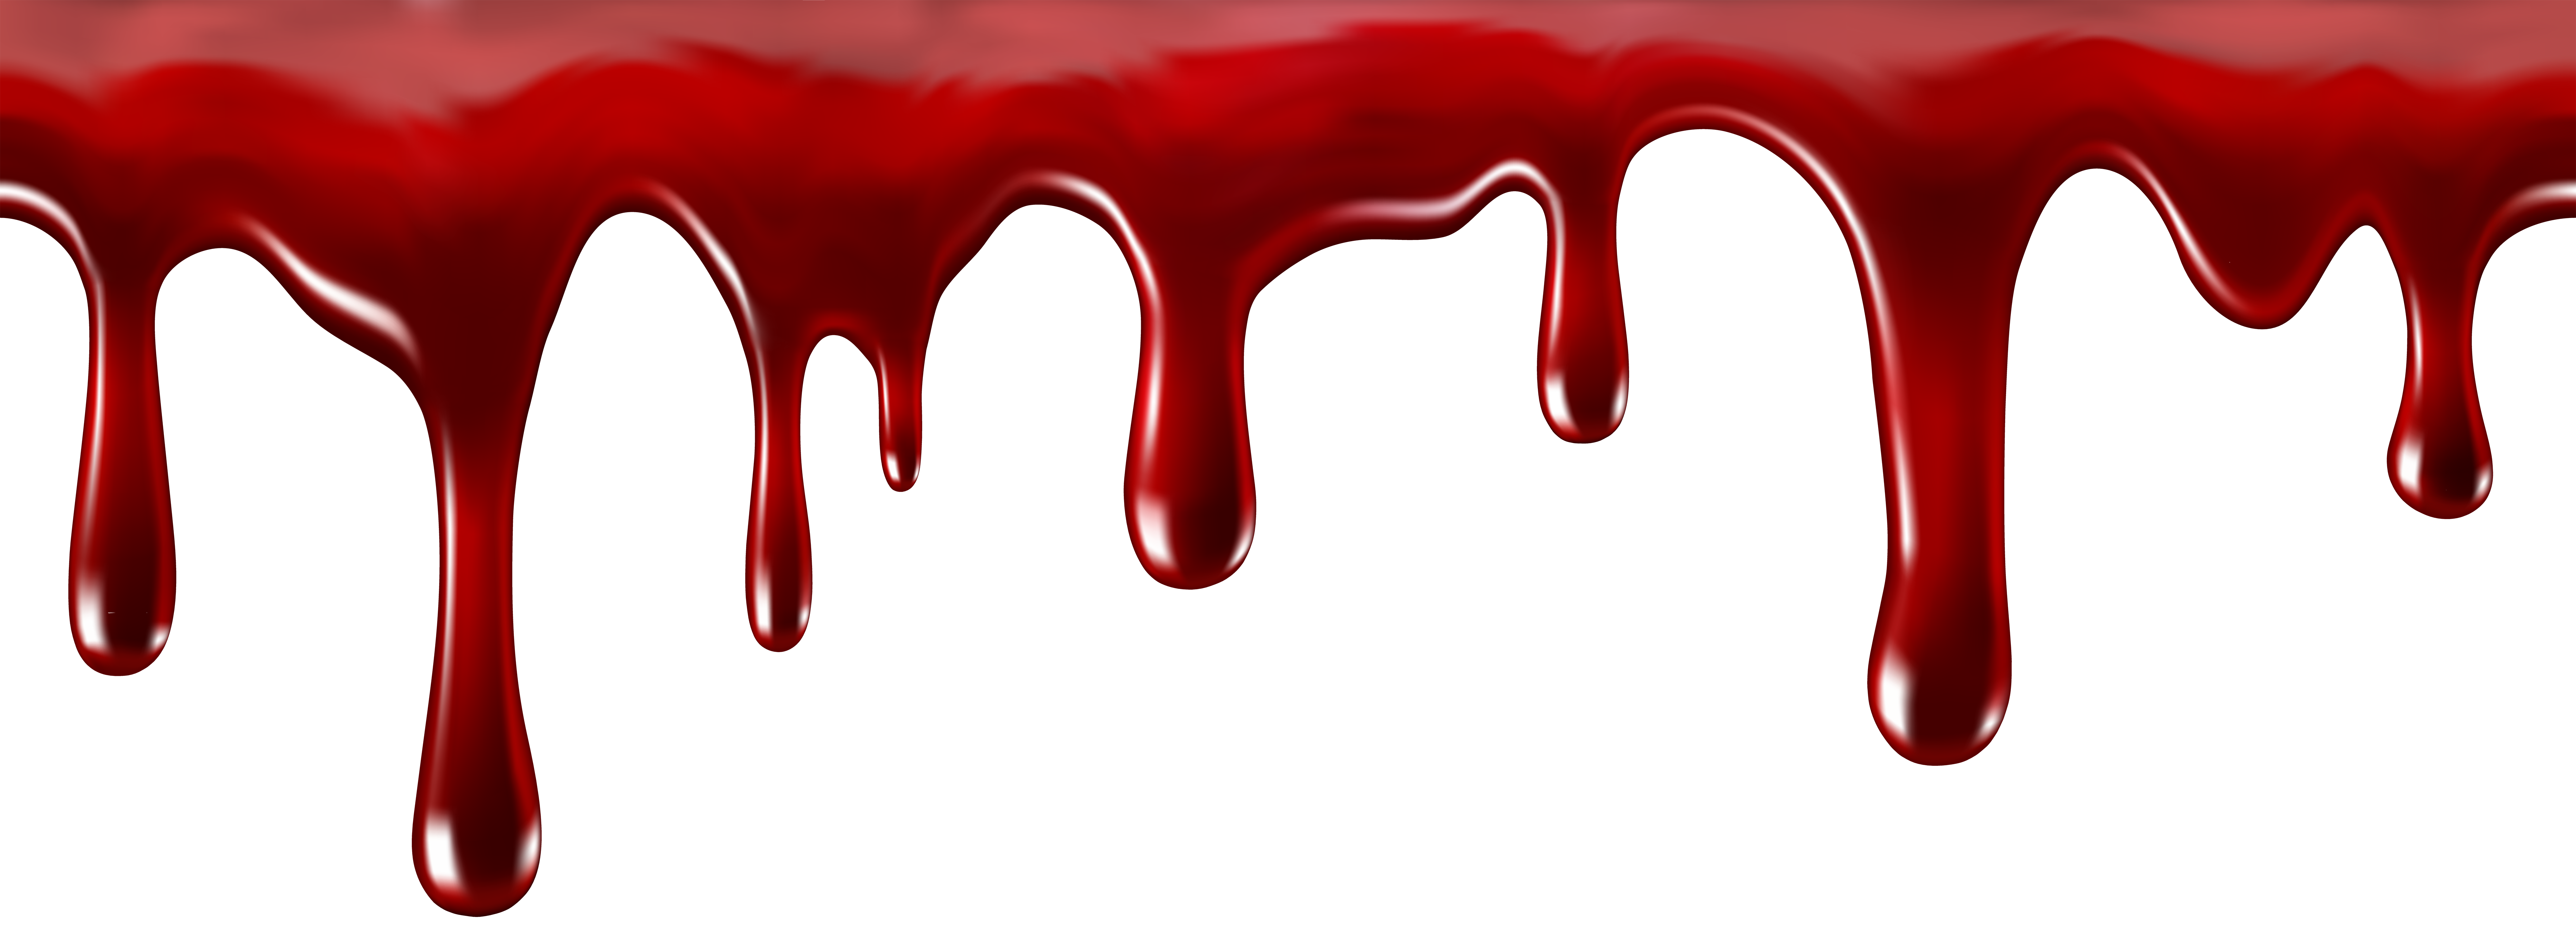 blood clipart - photo #41